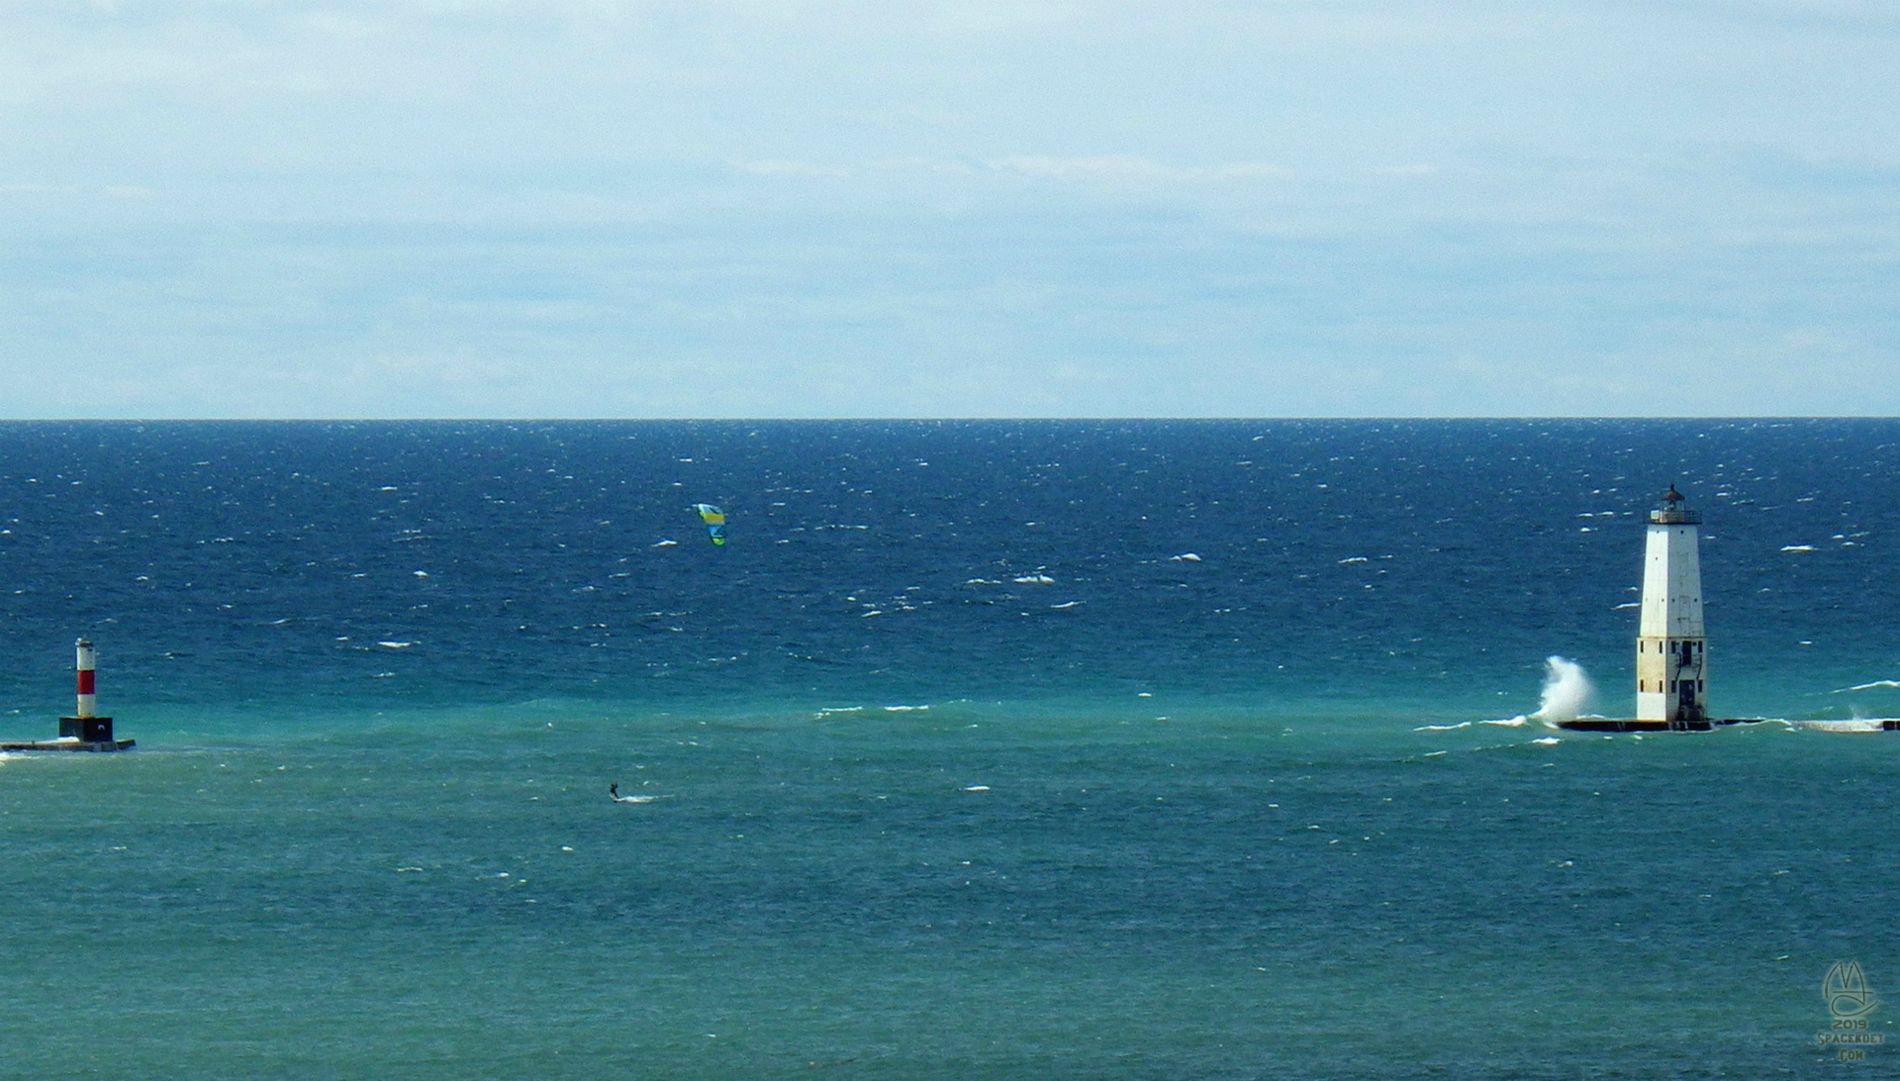 Frankfort Lighthouse with kite sailor